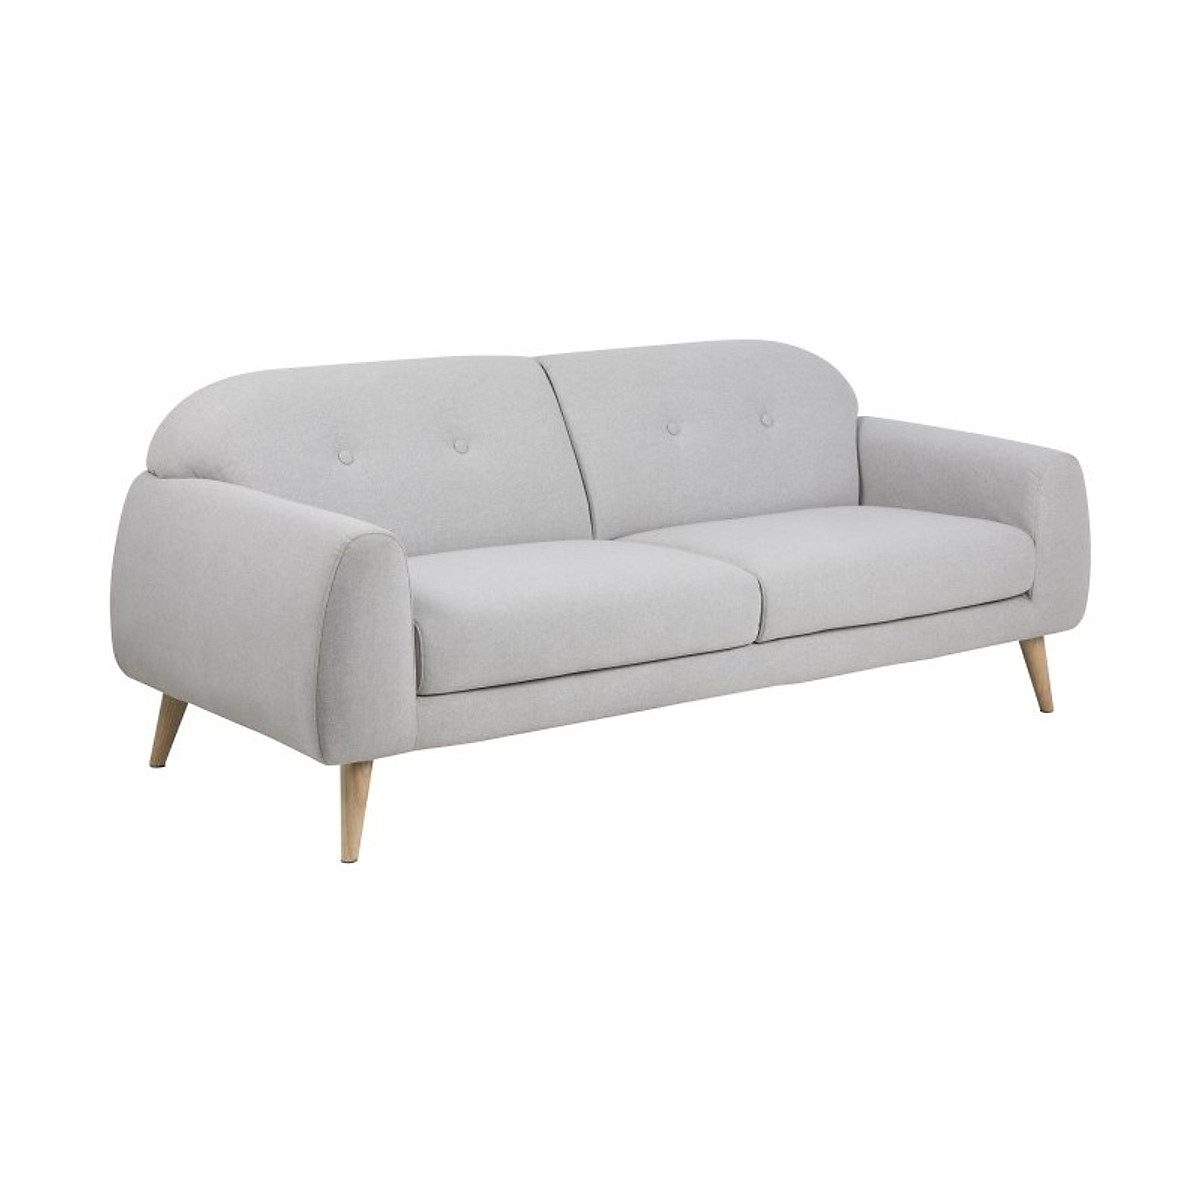 Sofa 3S Faster Vải Polyester JYSK - Xám Nhạt